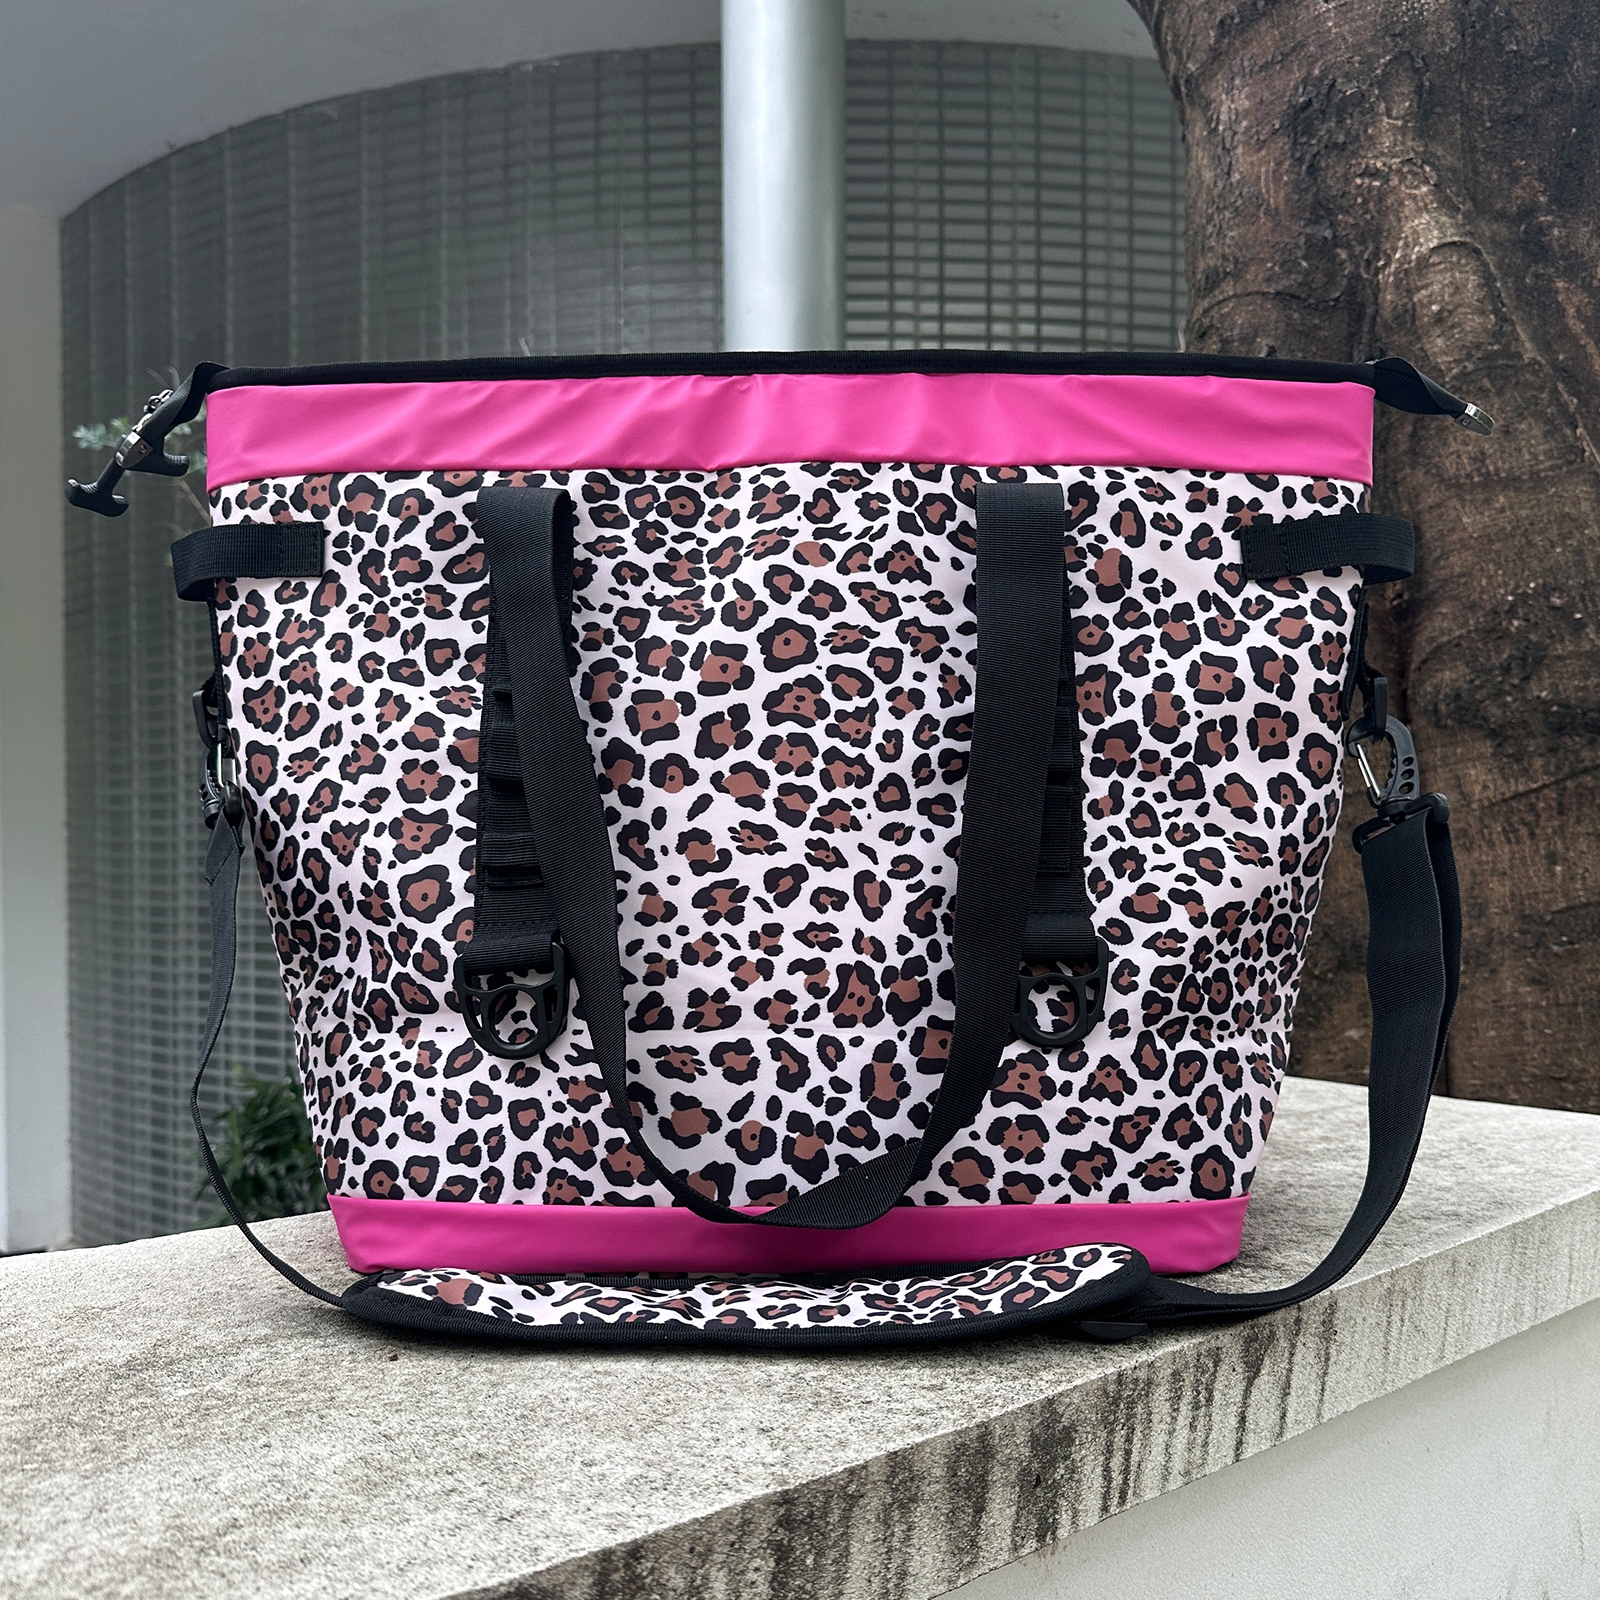 Leopard Cow Print Summer Beach Cooler Shoulder Bag